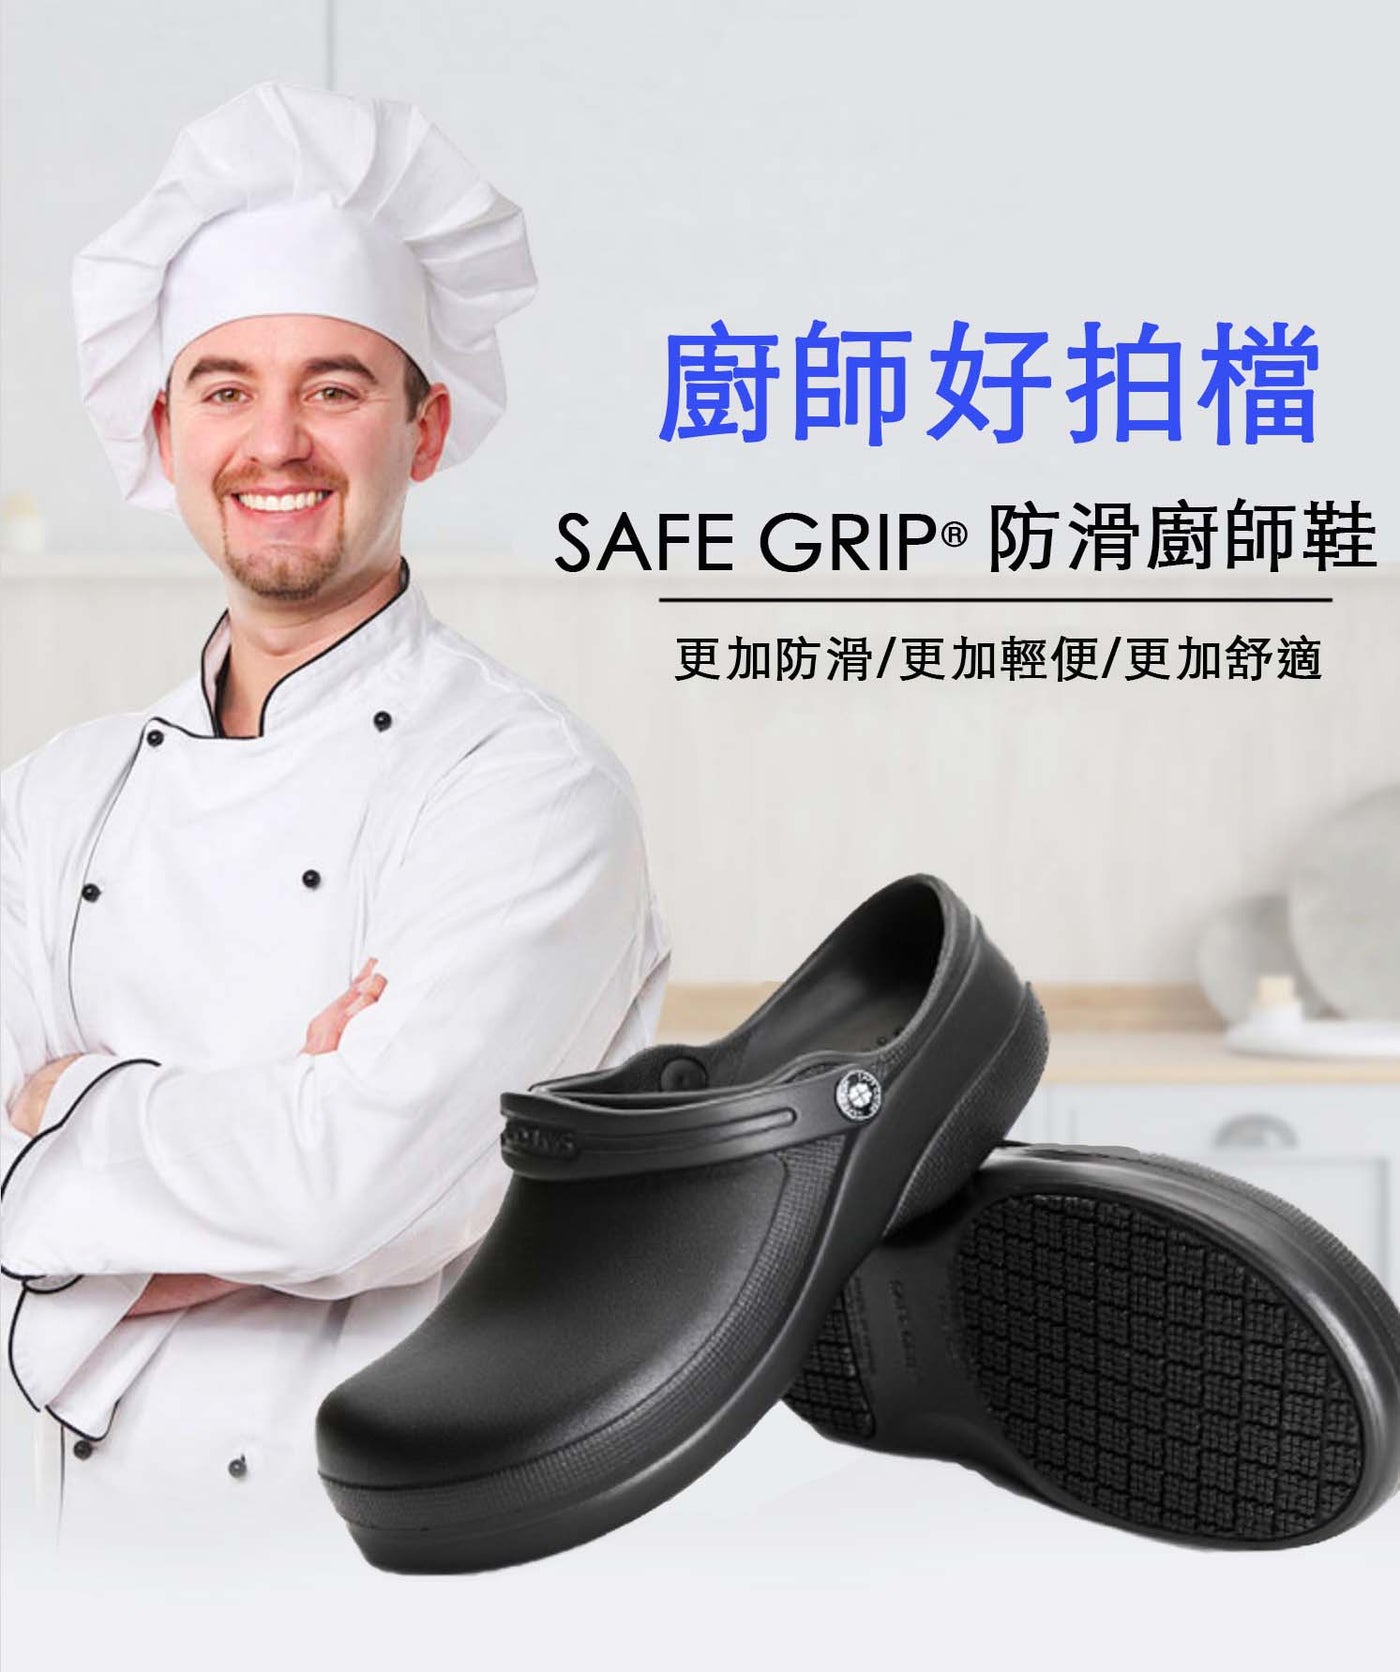 SAFE GRIP® 防滑廚鞋